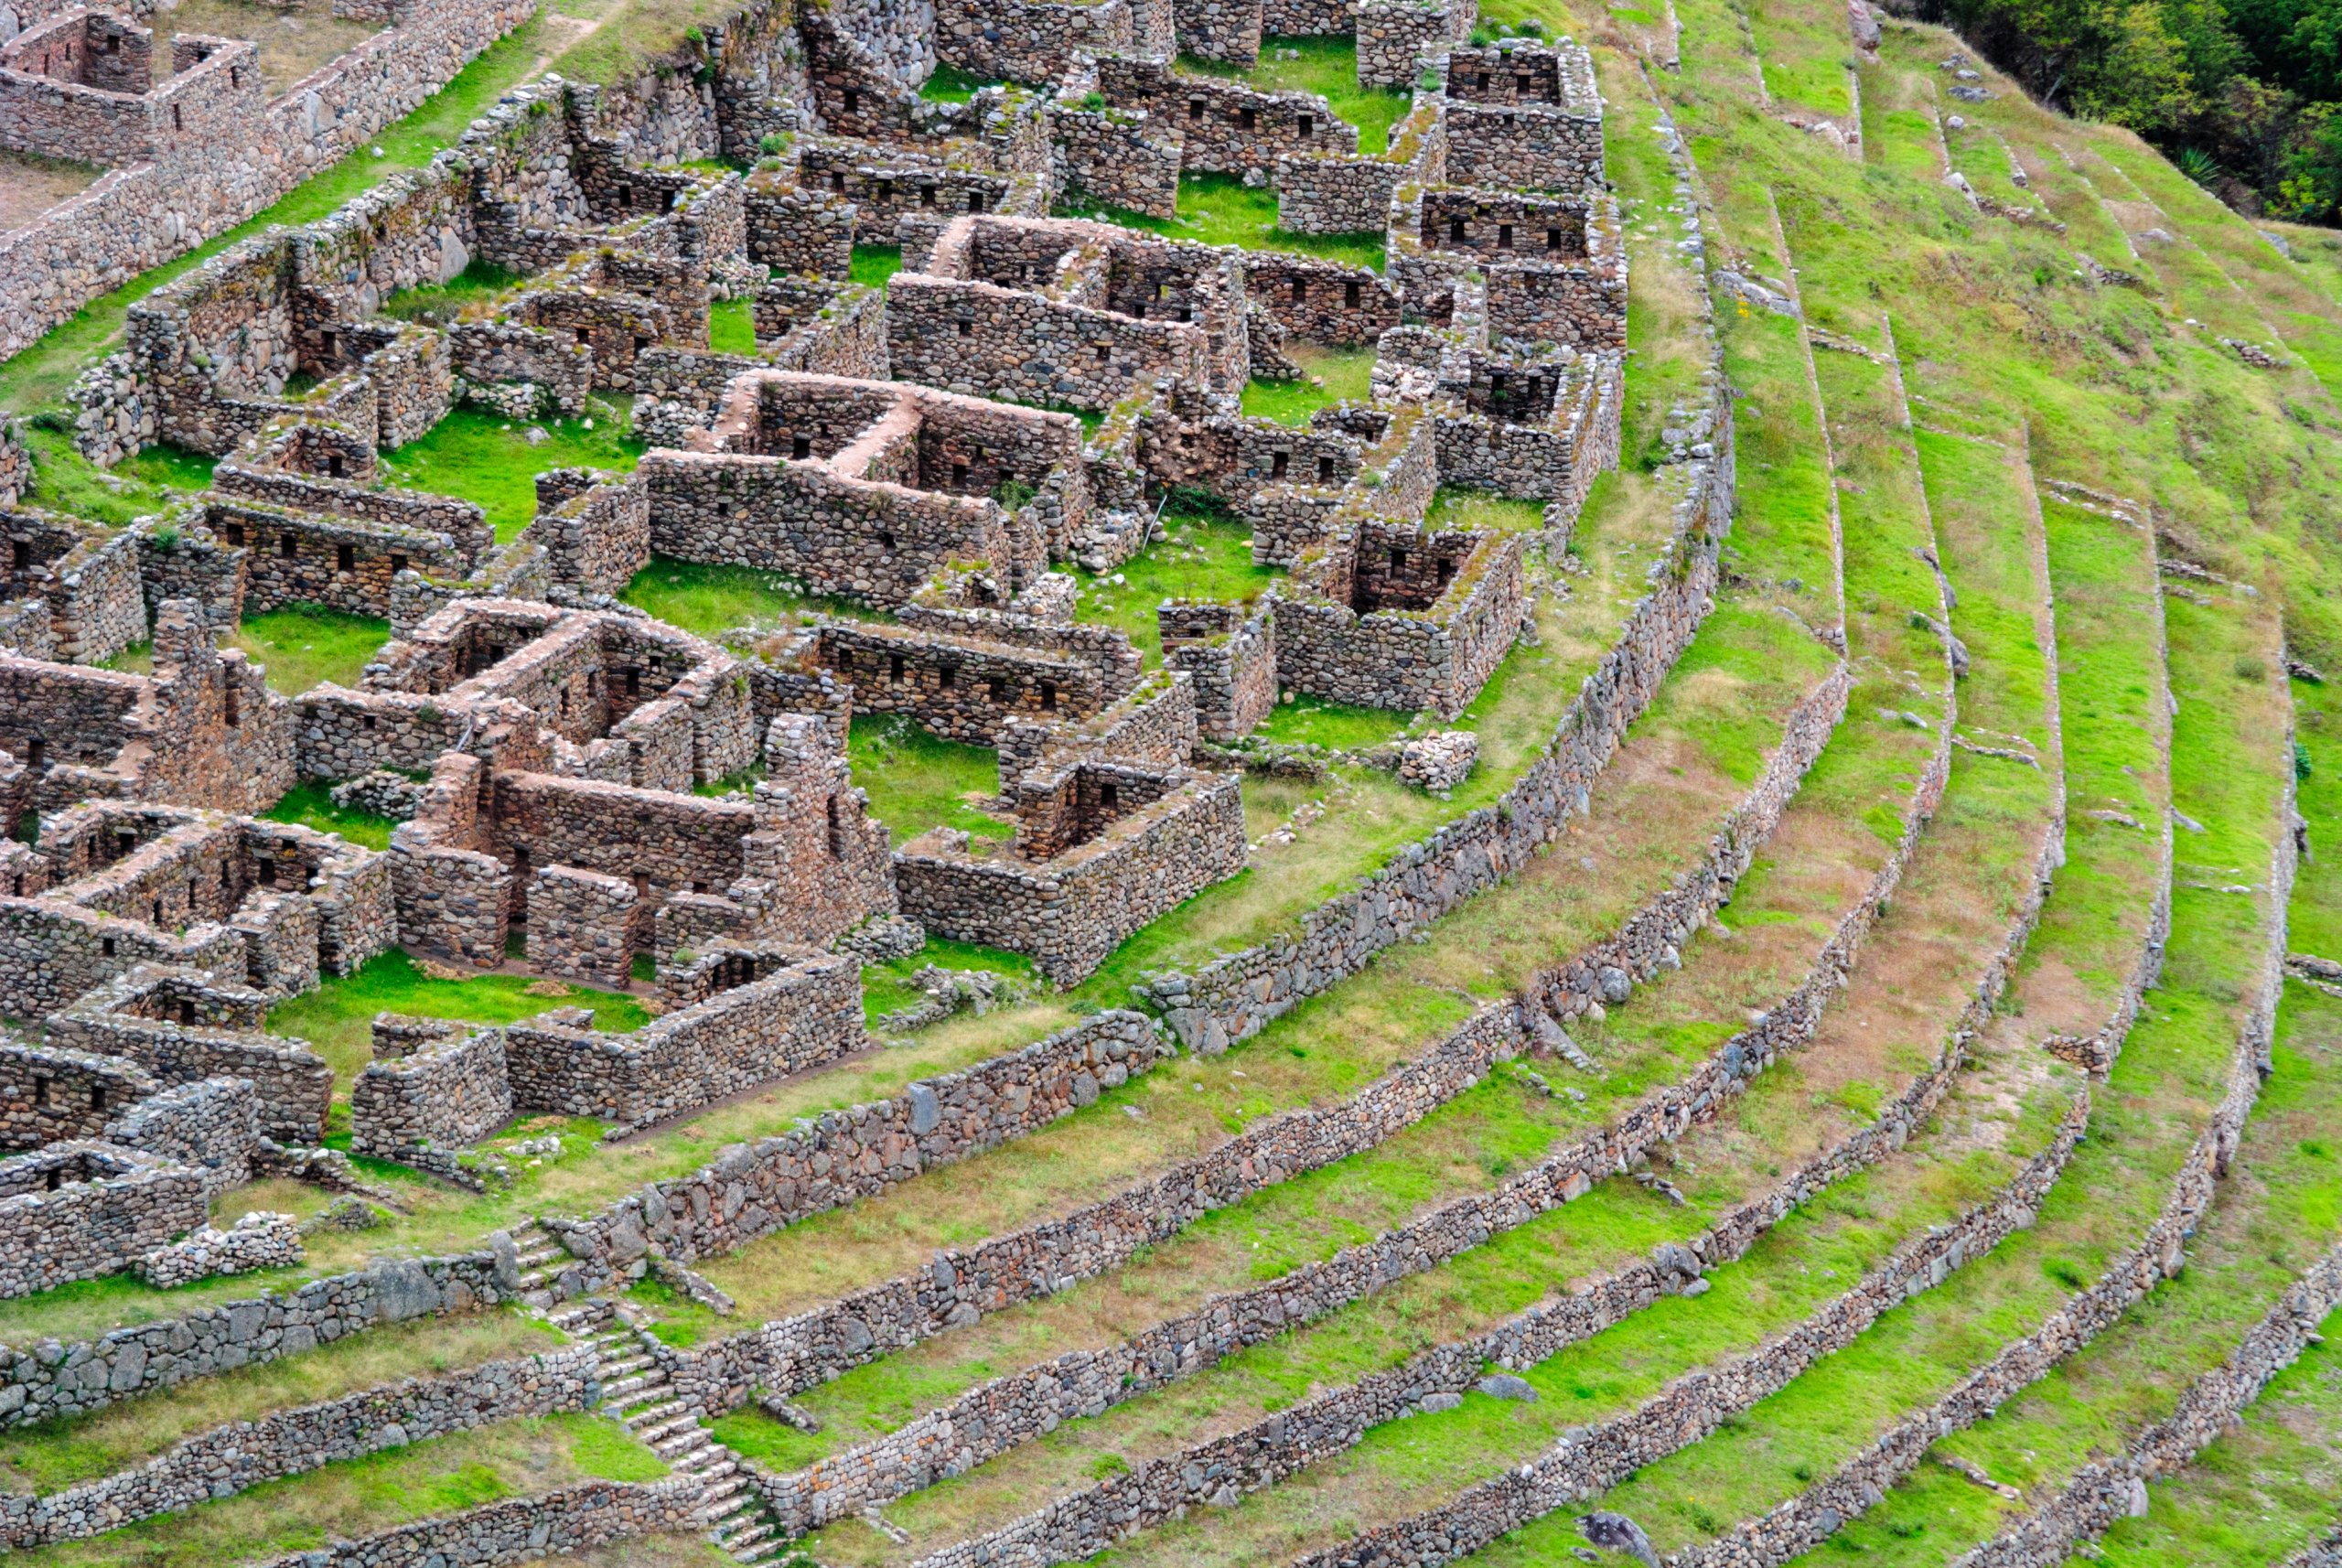 Llactapata ancient inca ruins on the Inca Trail